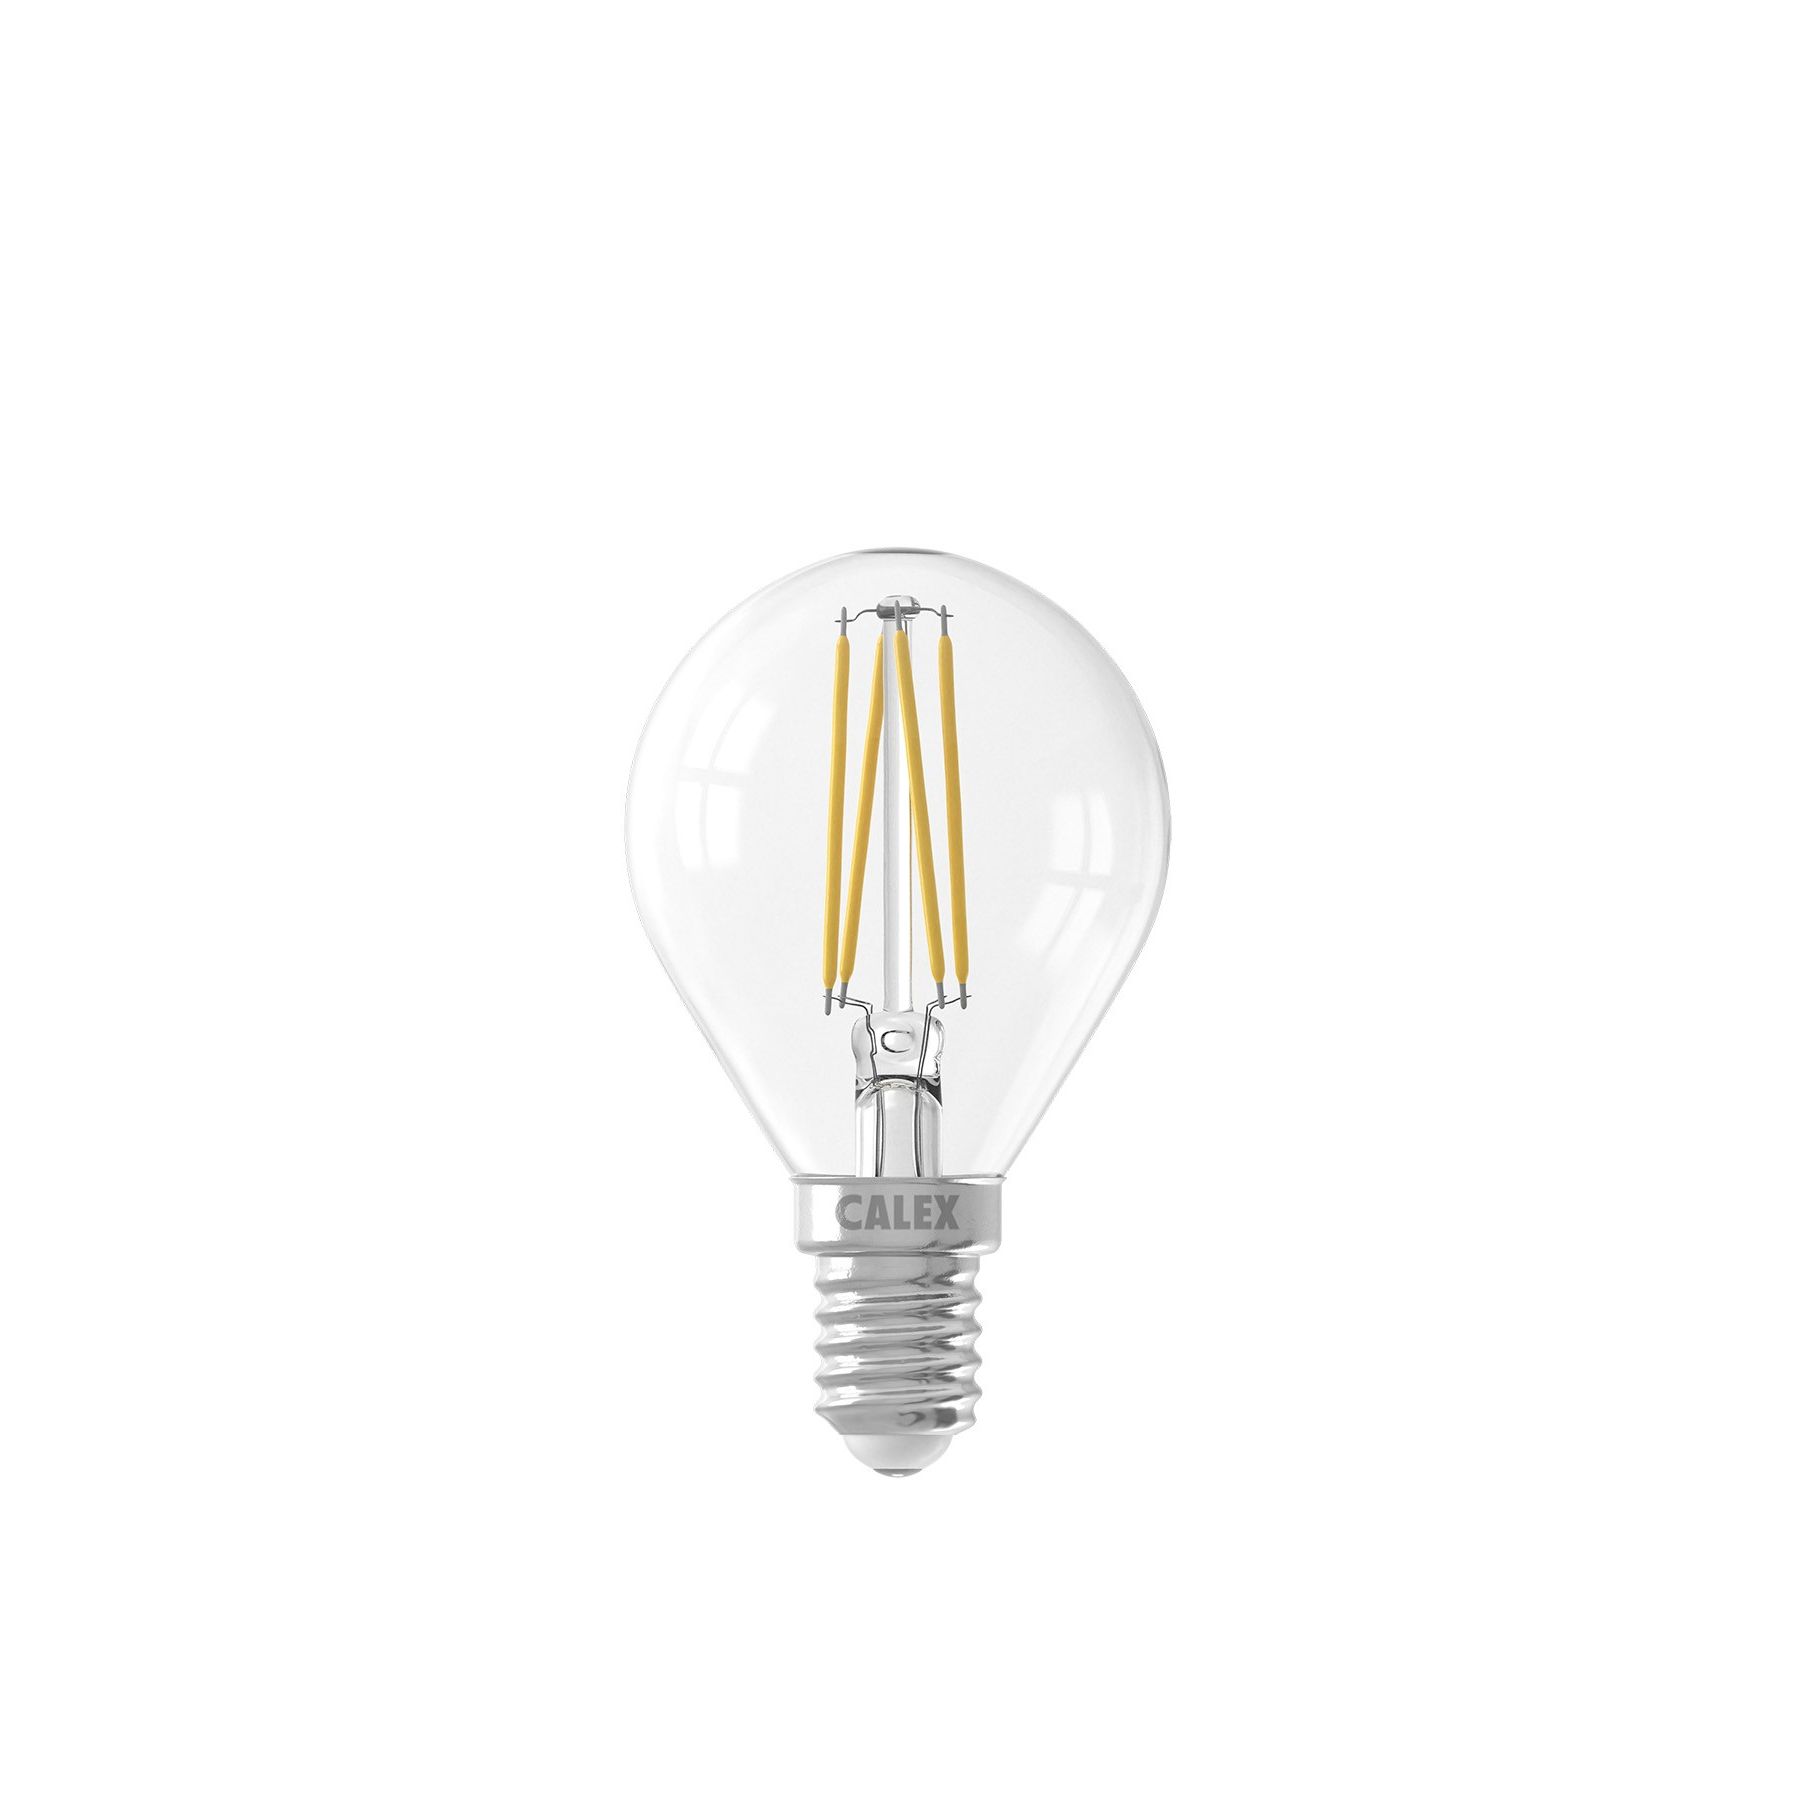 echtgenoot slagader parlement Calex LED lamp - Ø 4,5 x 7,7 cm - E14 - 4W - dimbaar - 2700K - transparant  | Lichtkoning